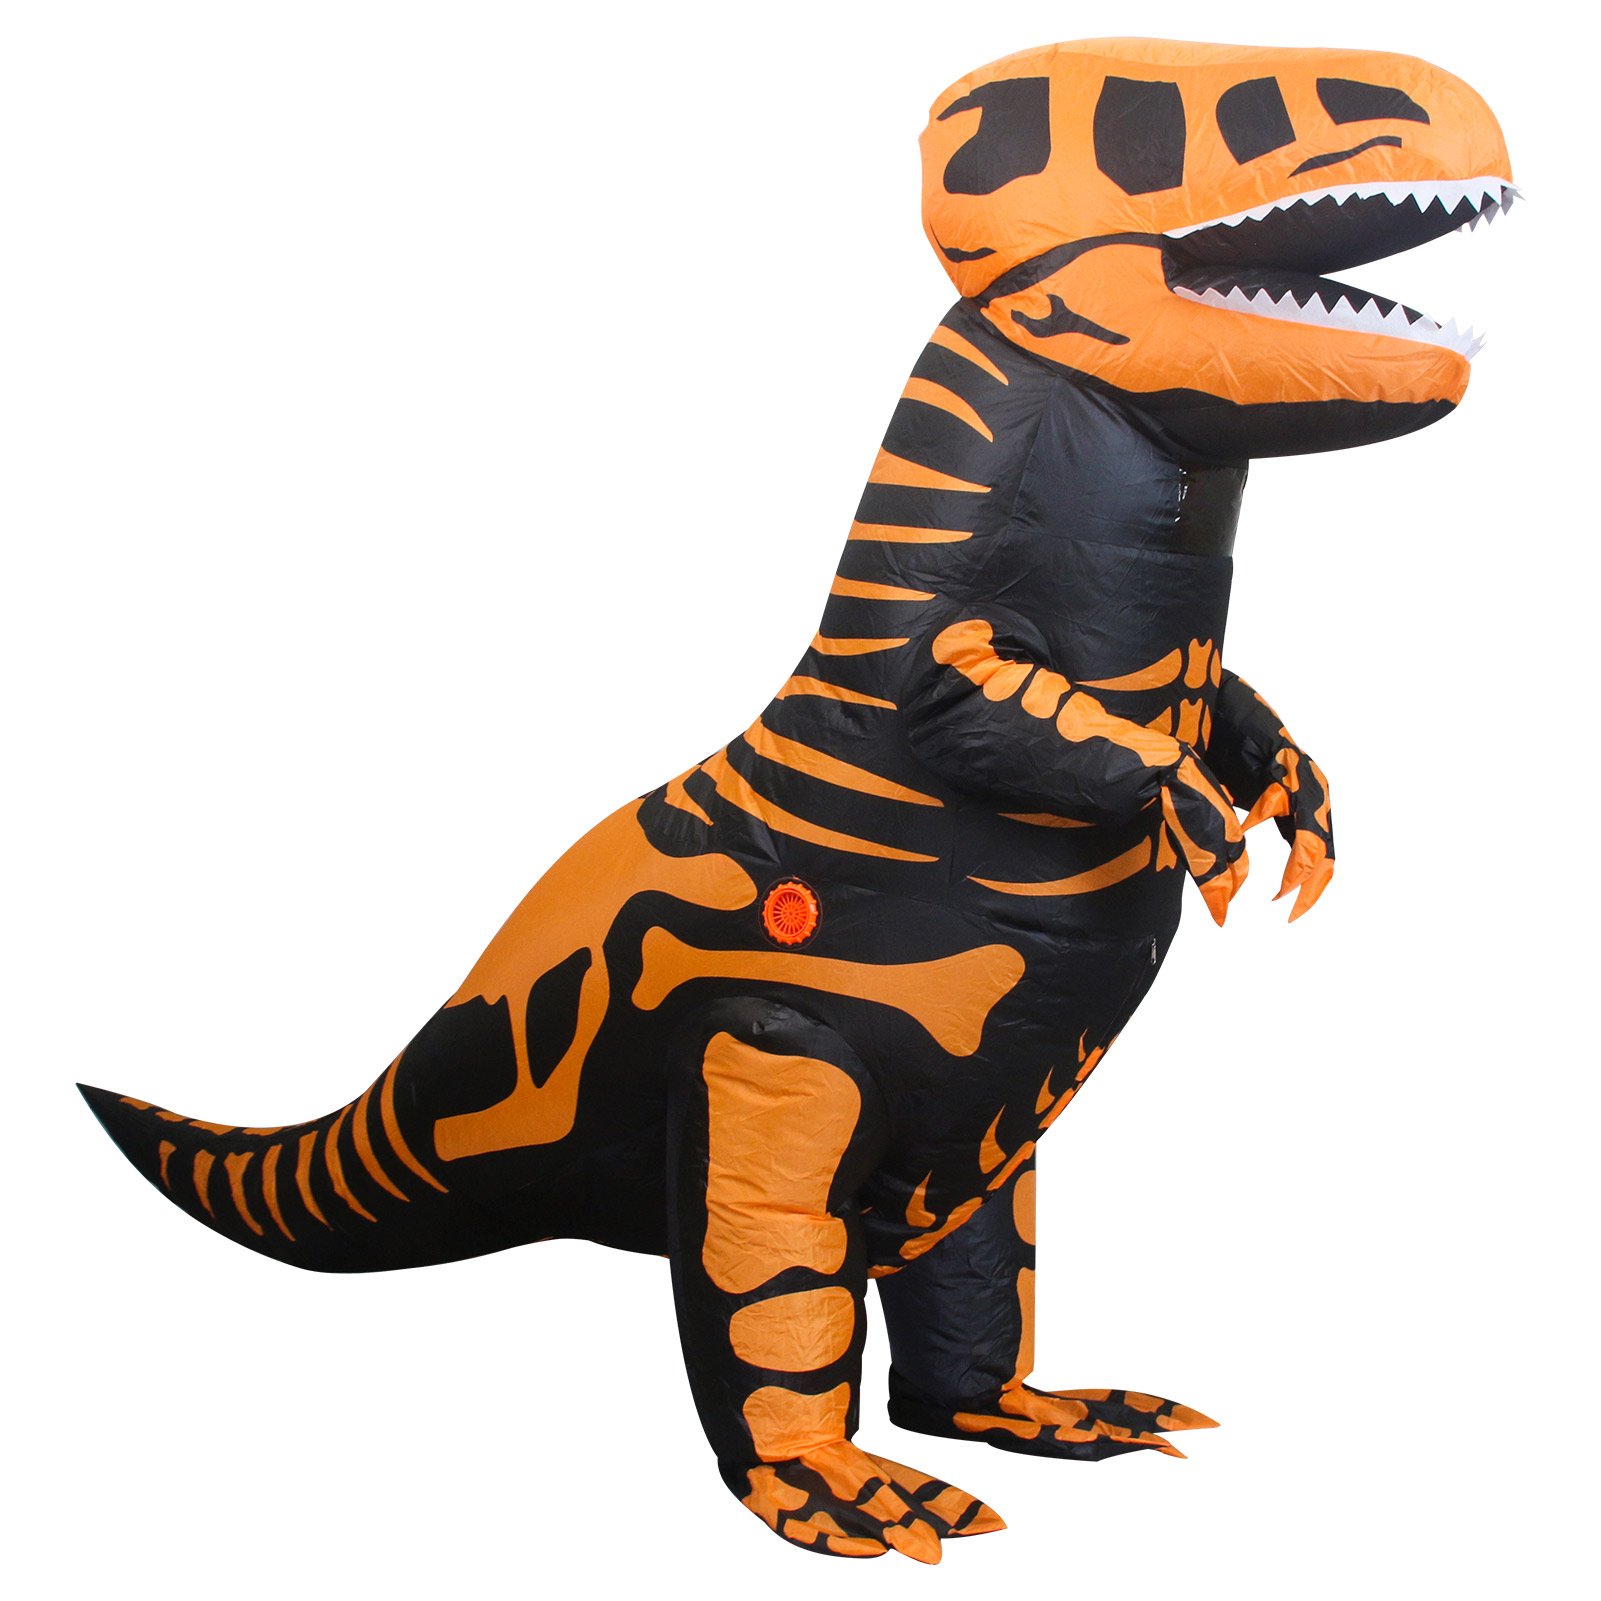 Disfraz inflable de dinosaurio T-rex jurásico premium halloween Toda ocasión Talla unitalla 6 a 12 años - Naranja